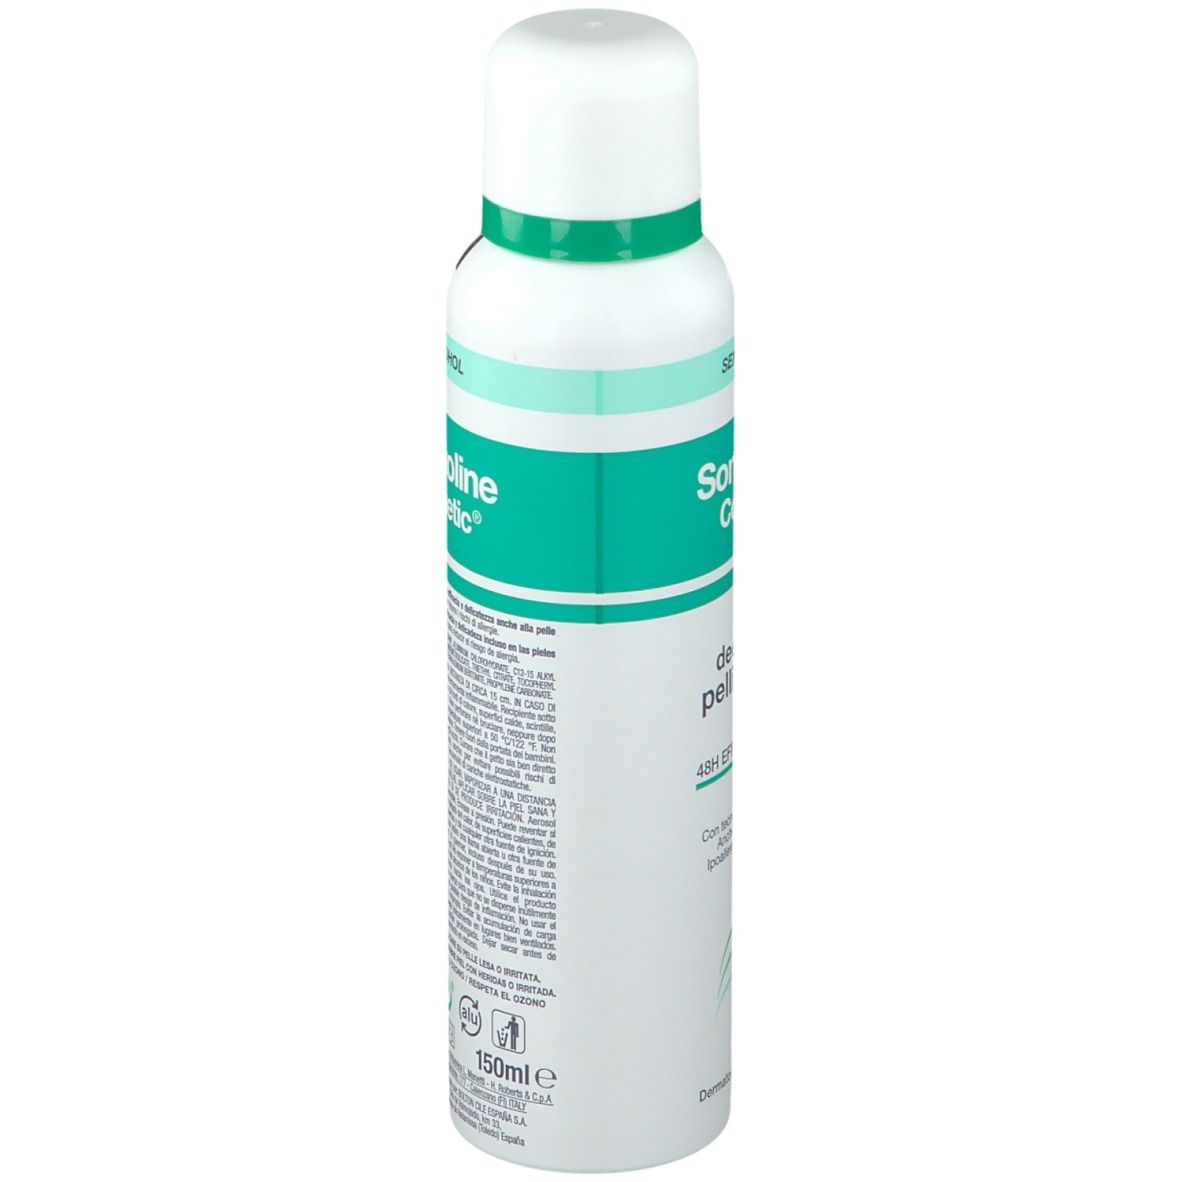 Somatoline Cosmetics® Pelli Sensibili Spray